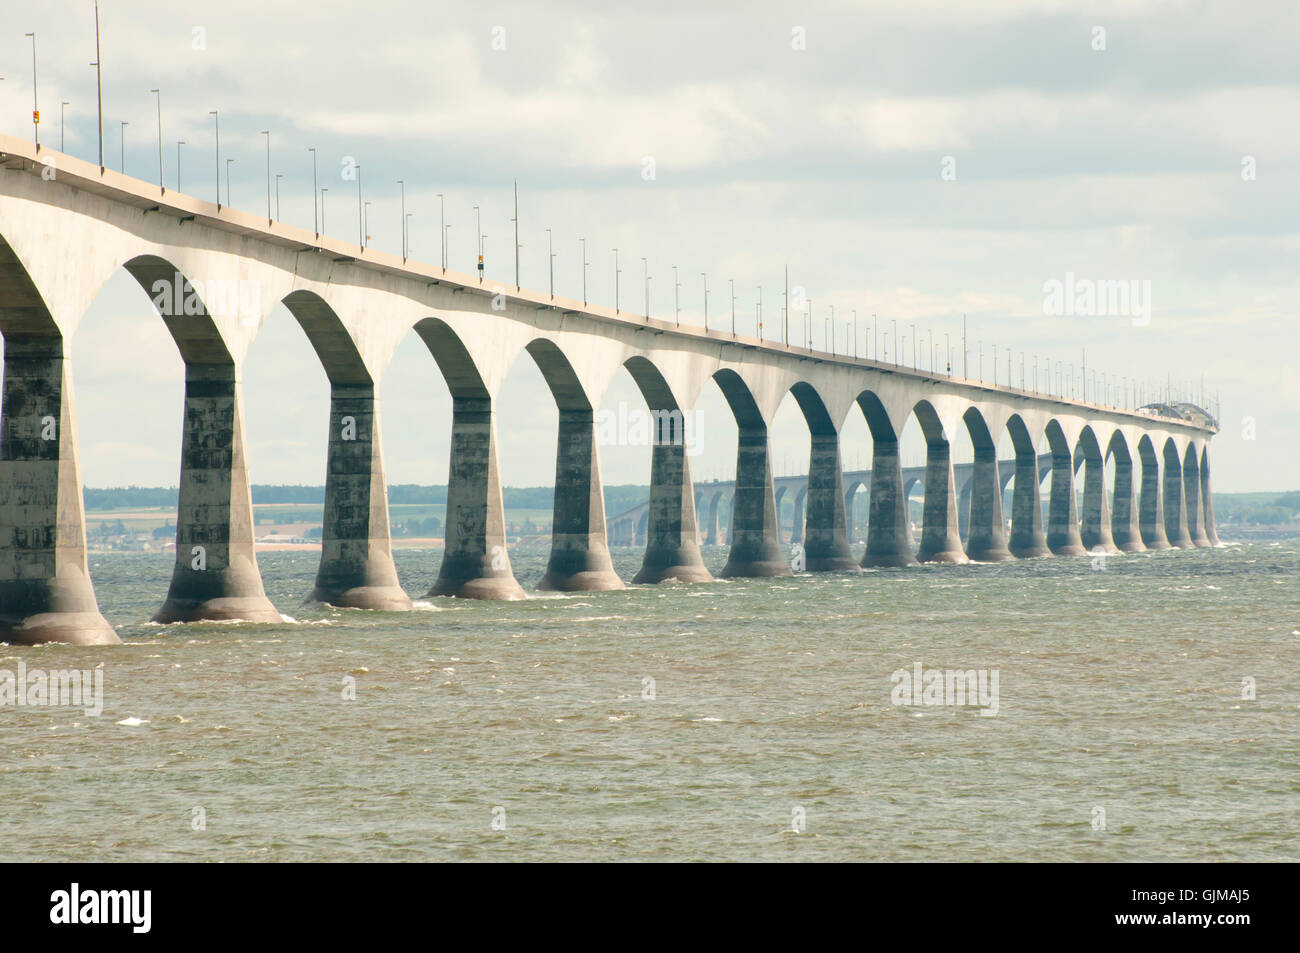 Confederation Bridge - Canada Stock Photo